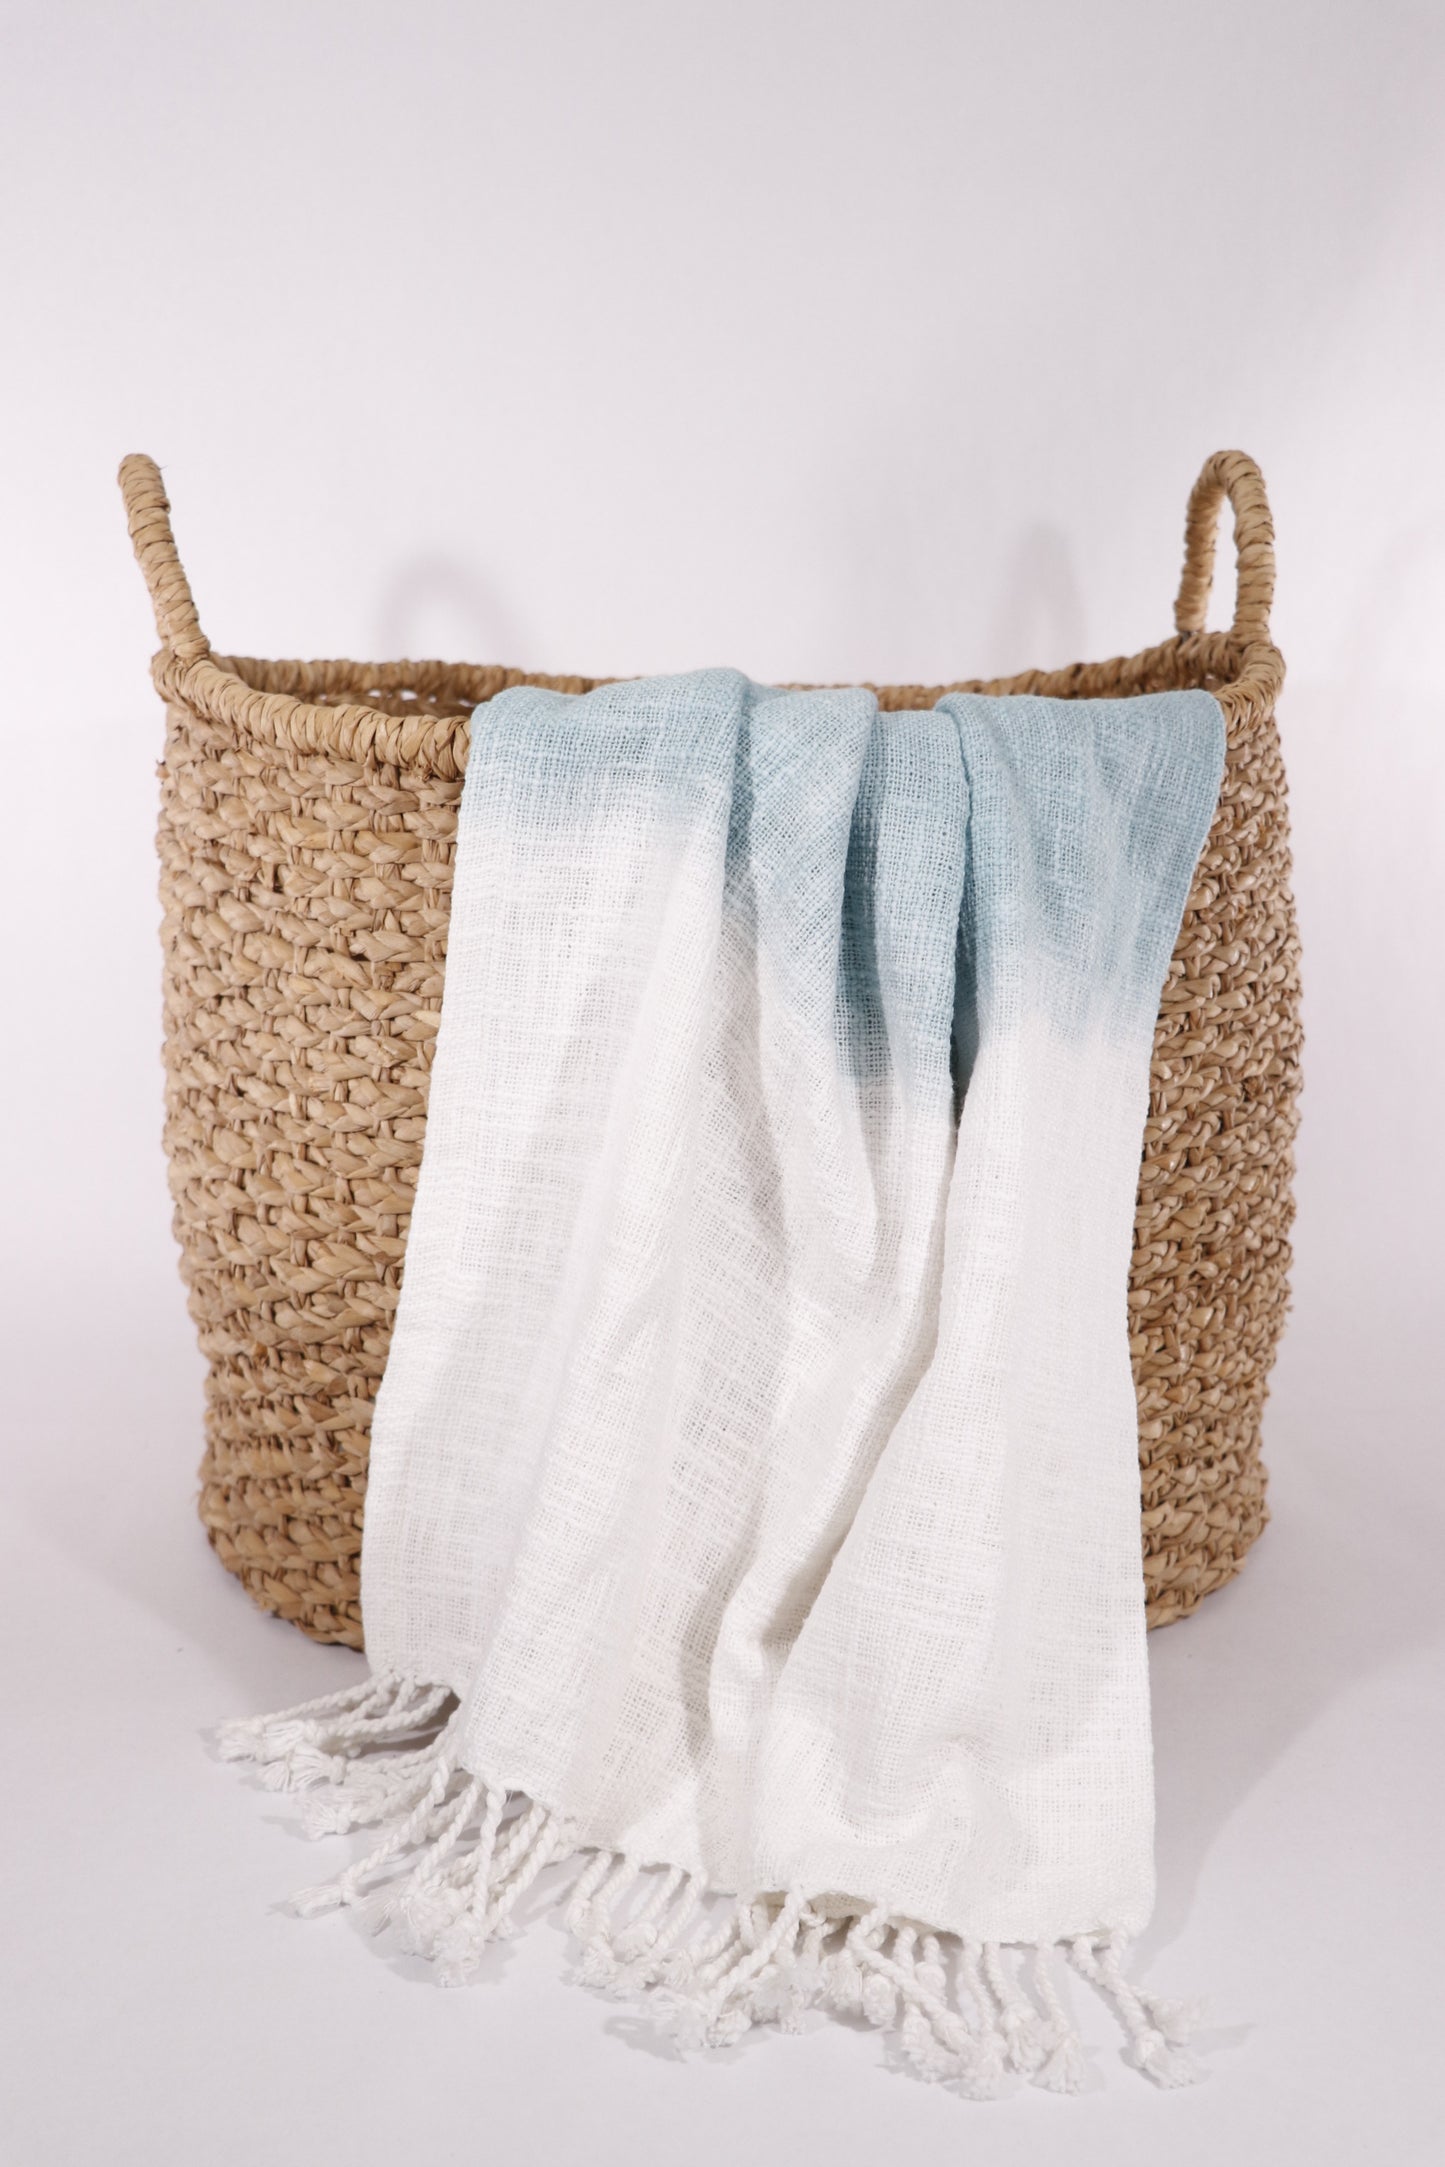 Shiboria Blue and White Ombré Tasseled Throw Blanket